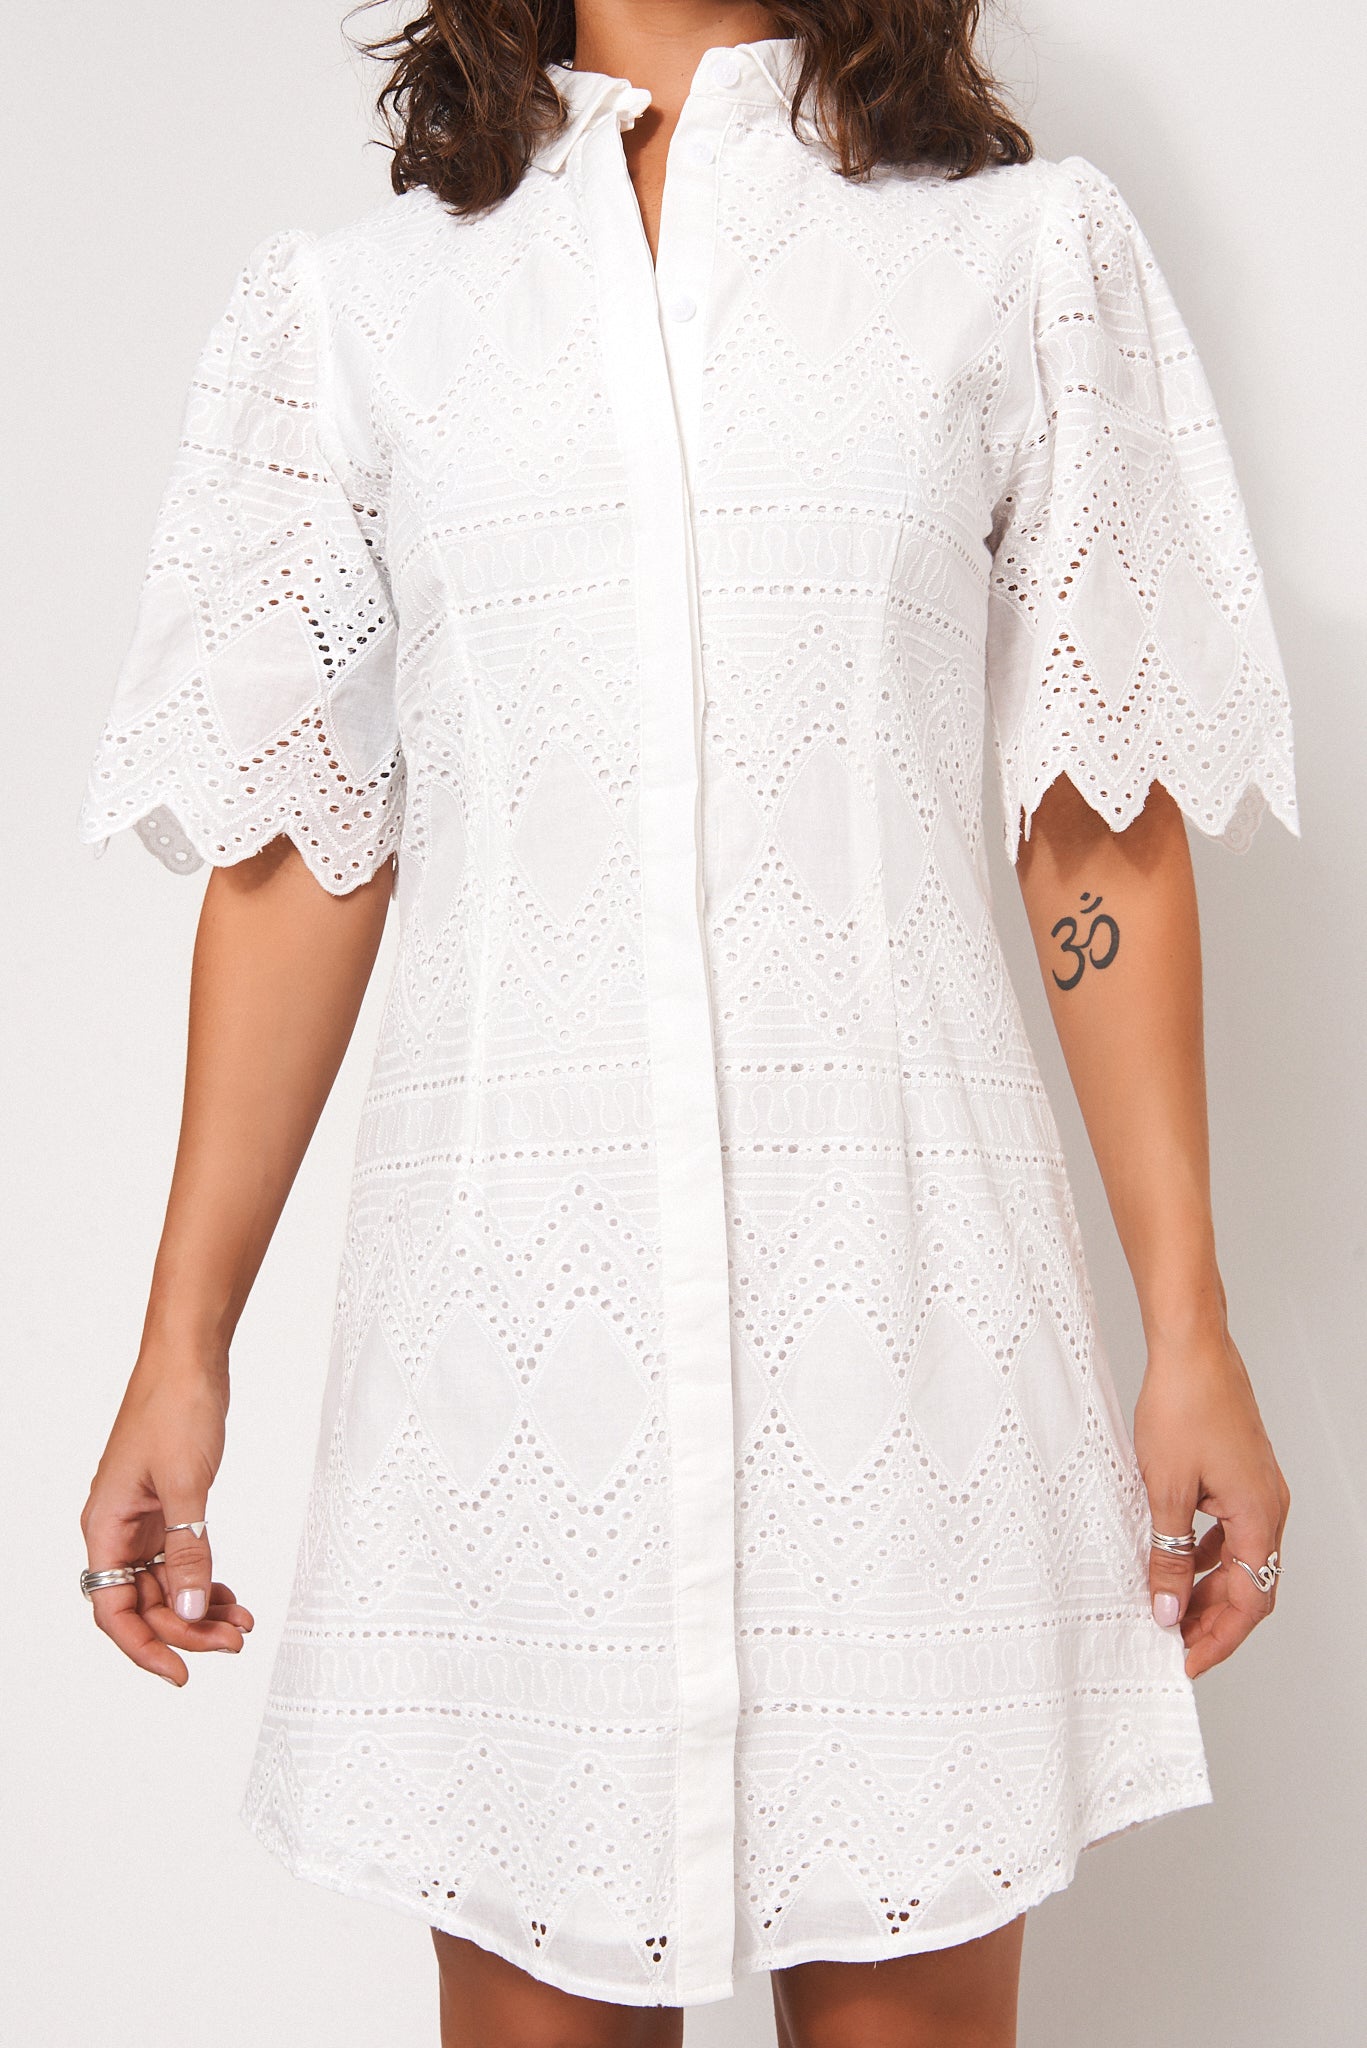 Ellie White Broderie Shirt Dress – The Fashion Bible